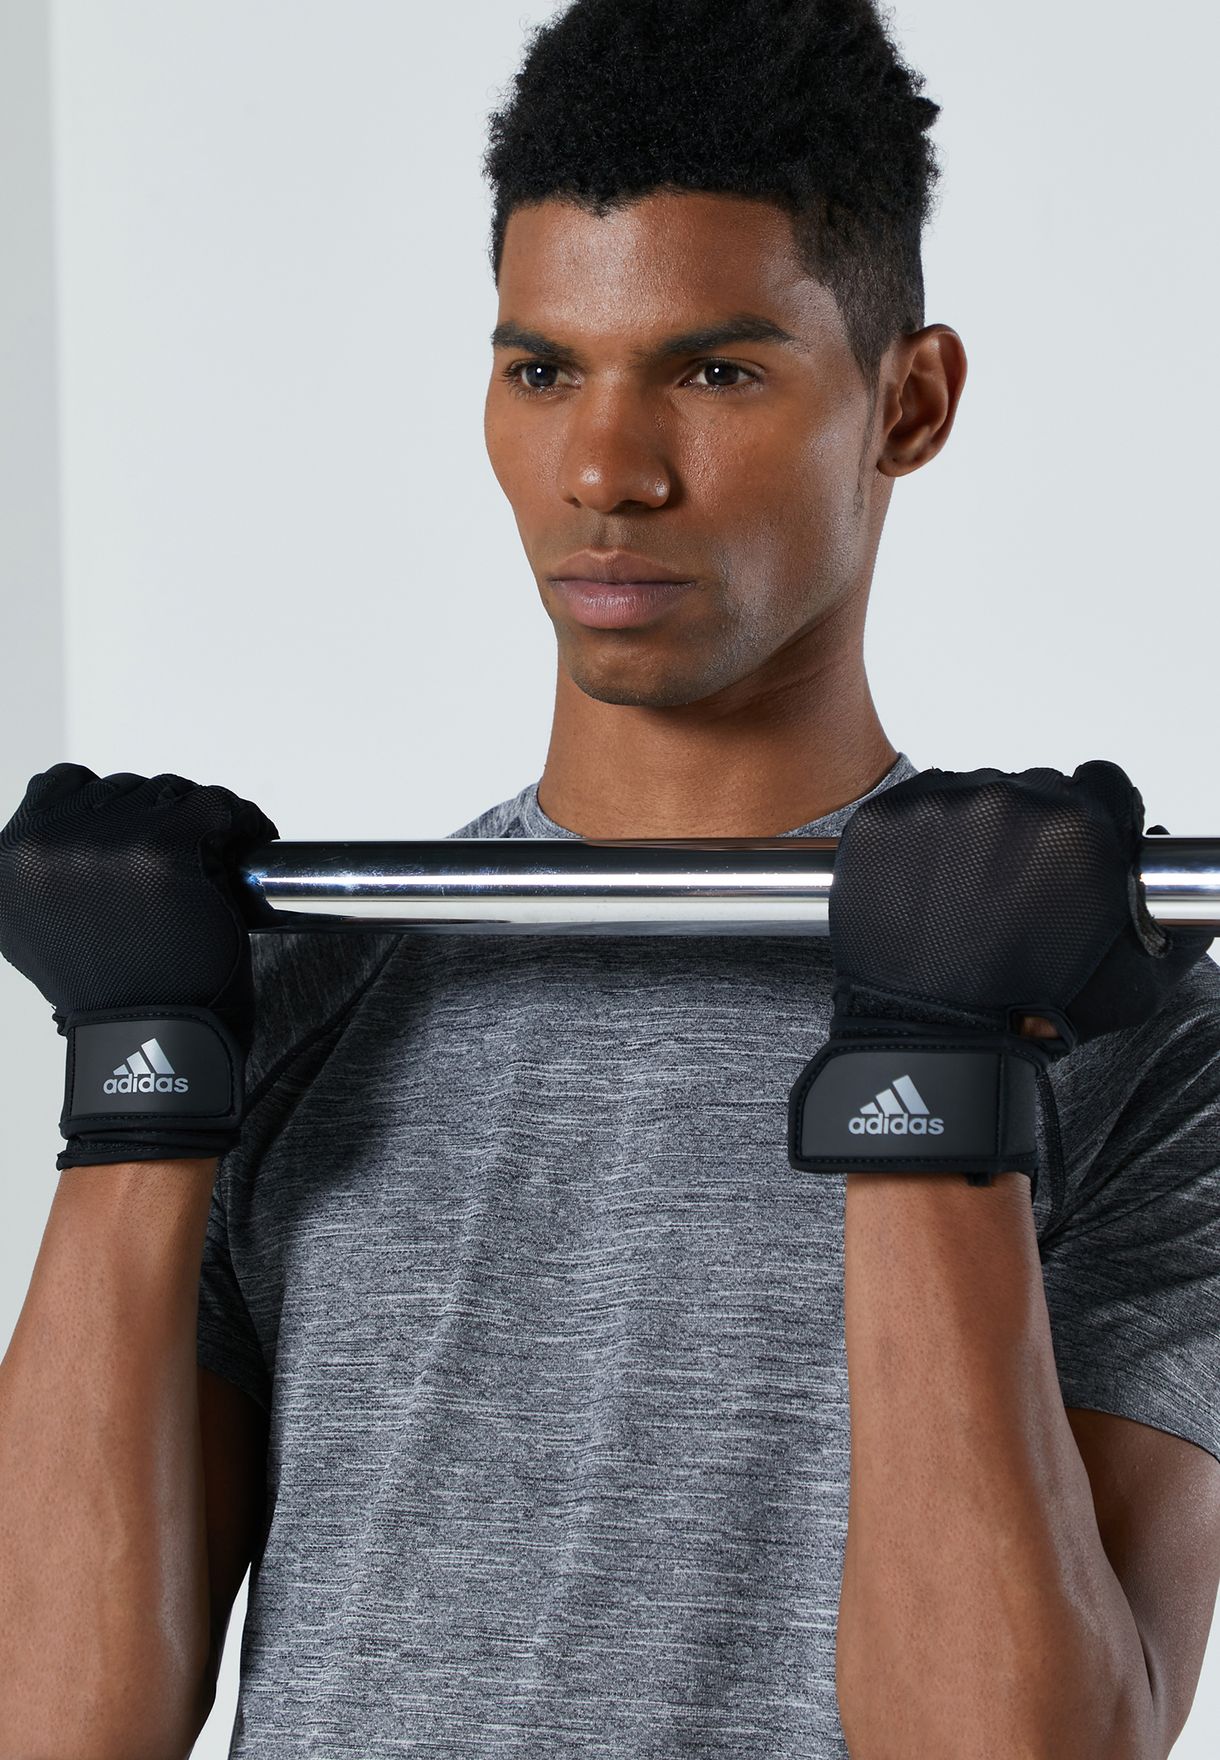 adidas ultimate training gloves